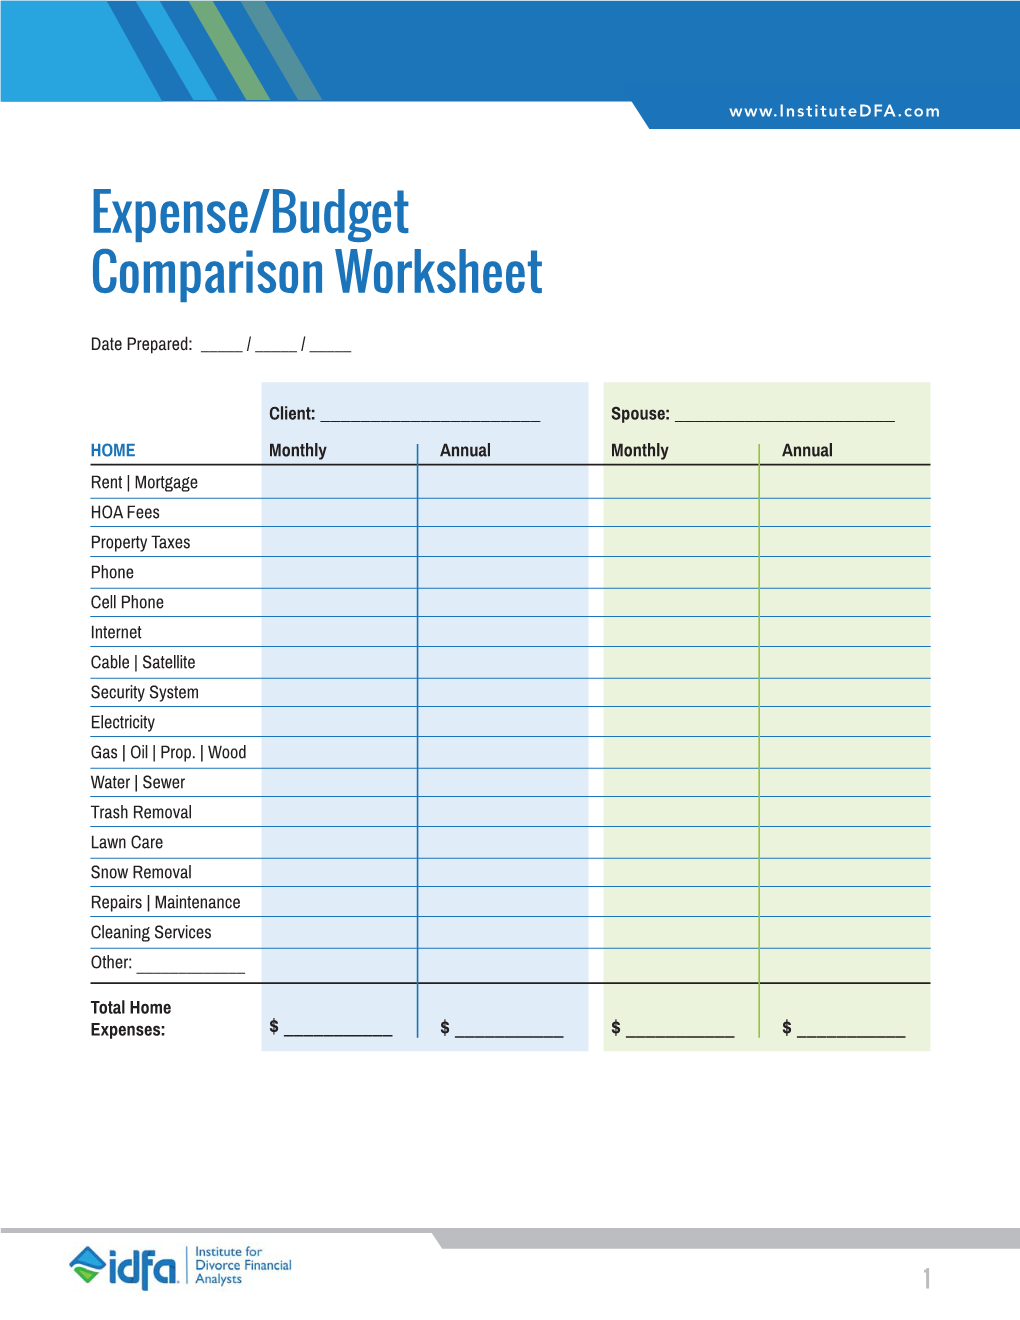 Expense/Budget Comparison Worksheet